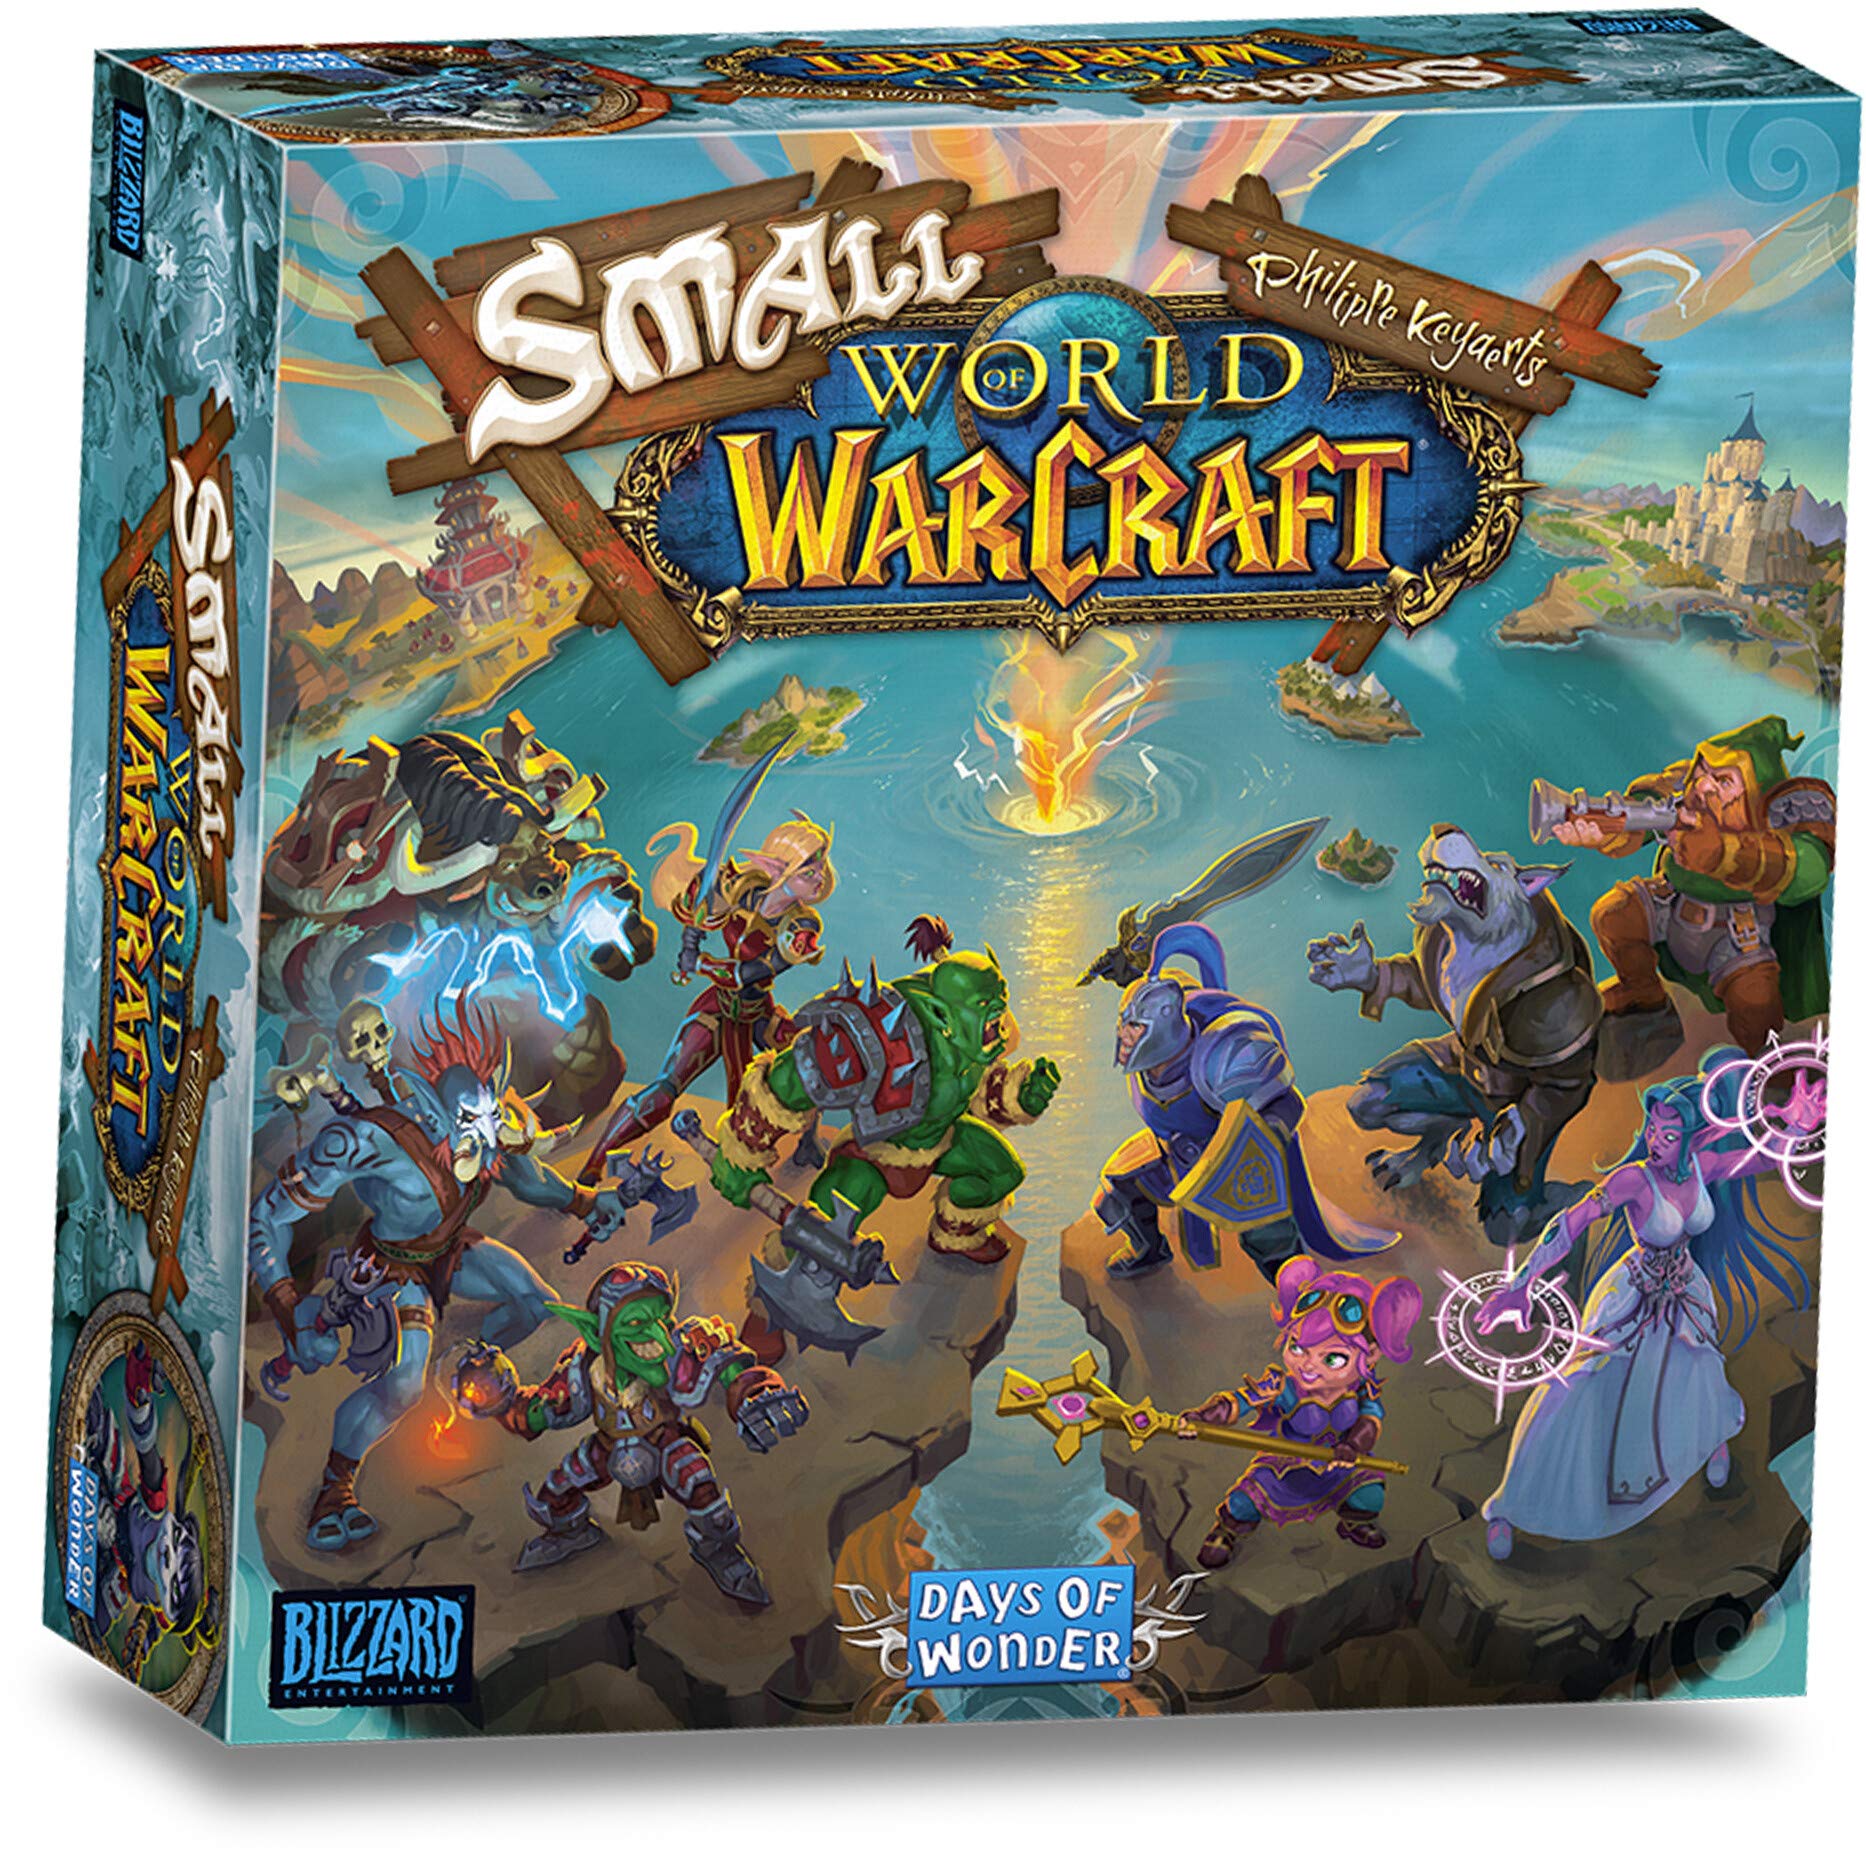 Small World of Warcraft | Multizone: Comics And Games